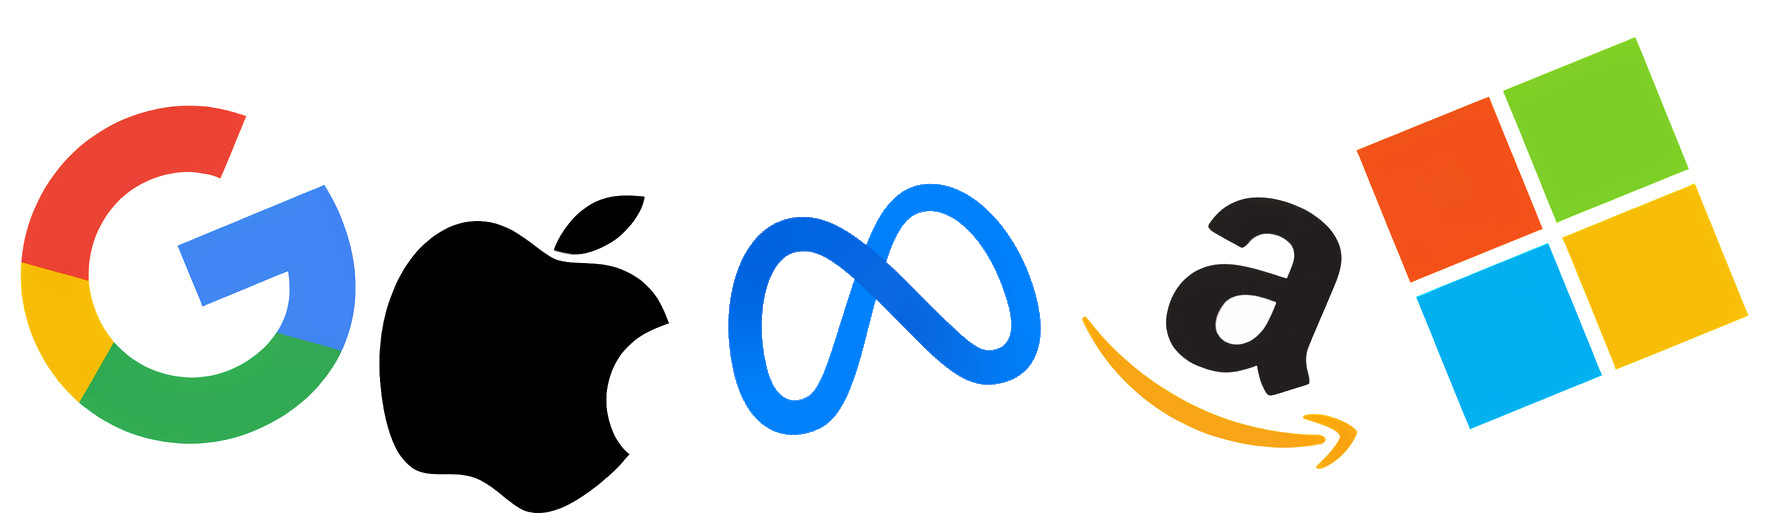 big tech logo's